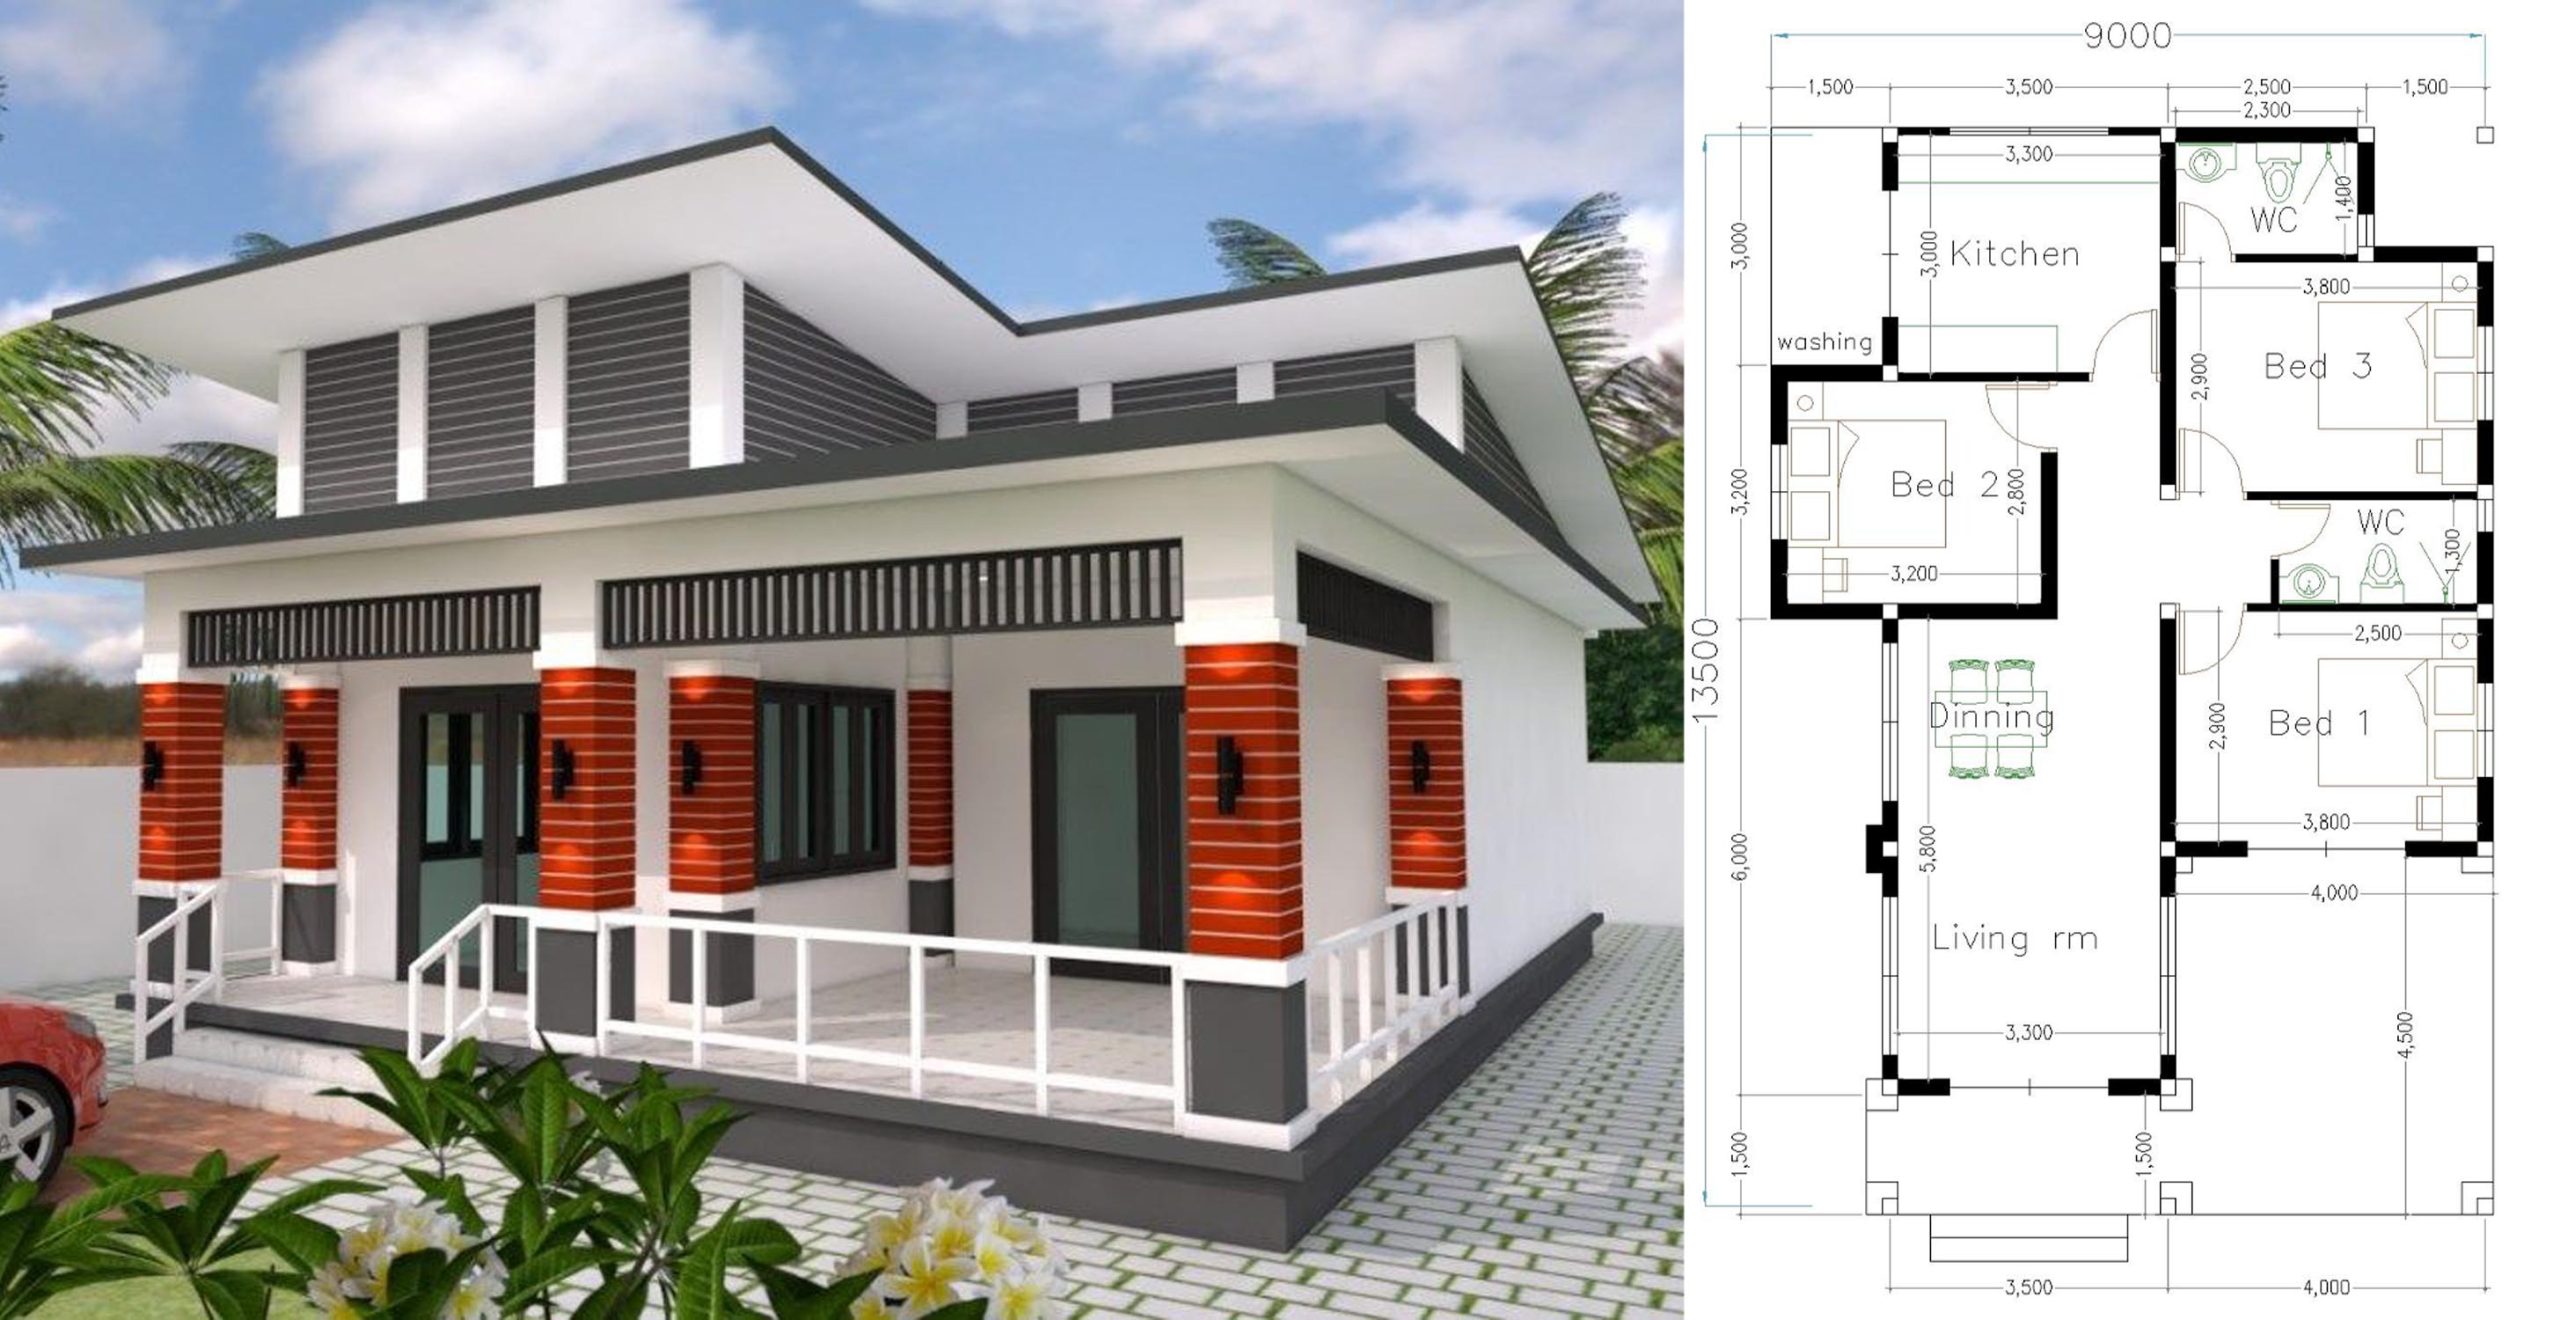 SIMPLE HOUSE DESIGN IDEA / 2 - BEDROOM BUNGALOW HOUSE - YouTube